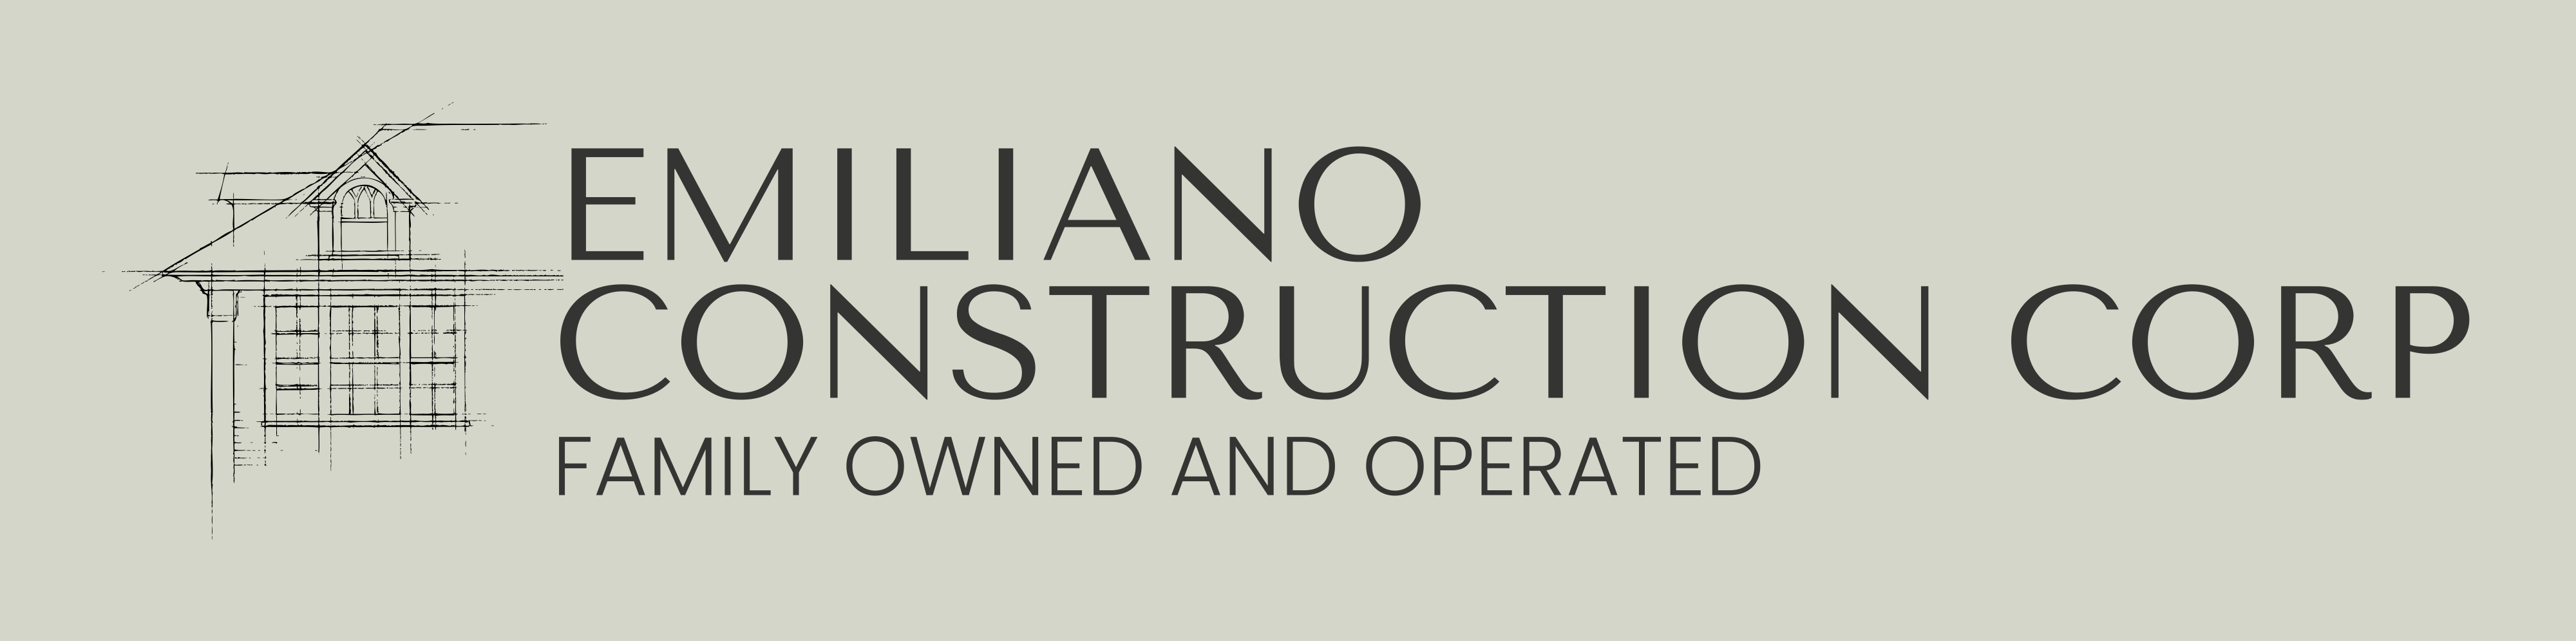 Emiliano Construction Corp logo